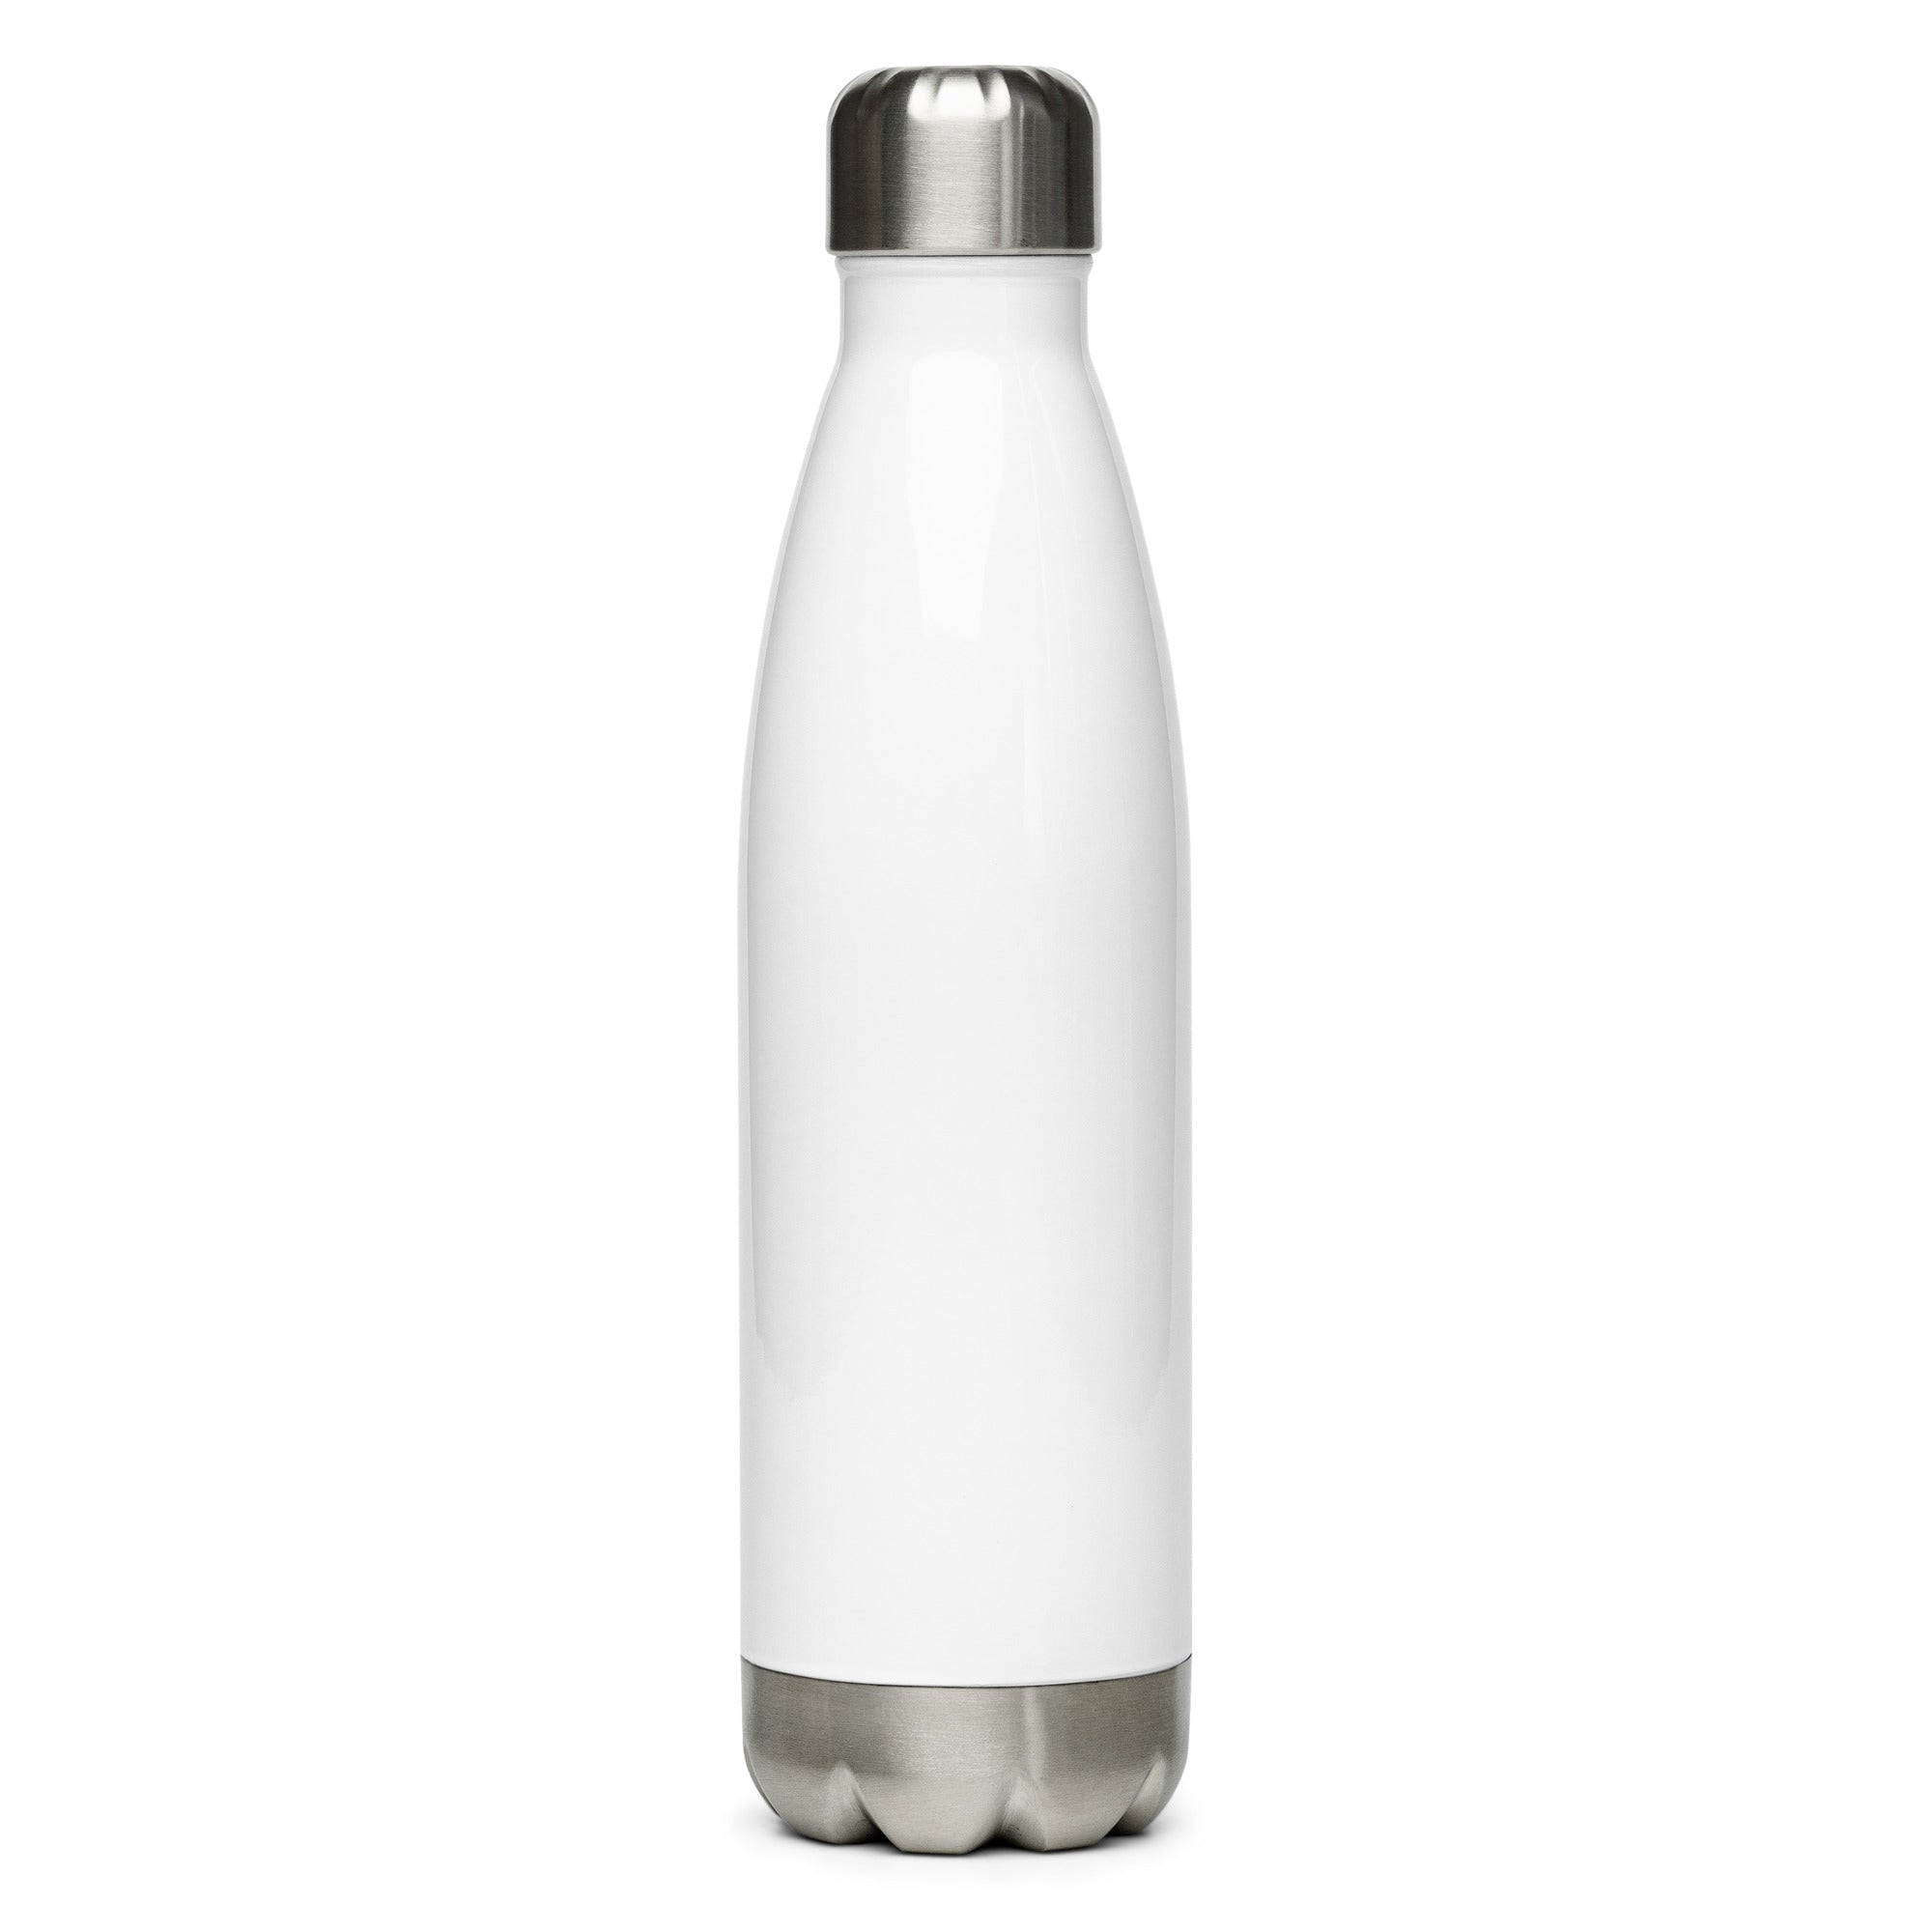 Stainless steel water bottle - Psalm 121:1-2